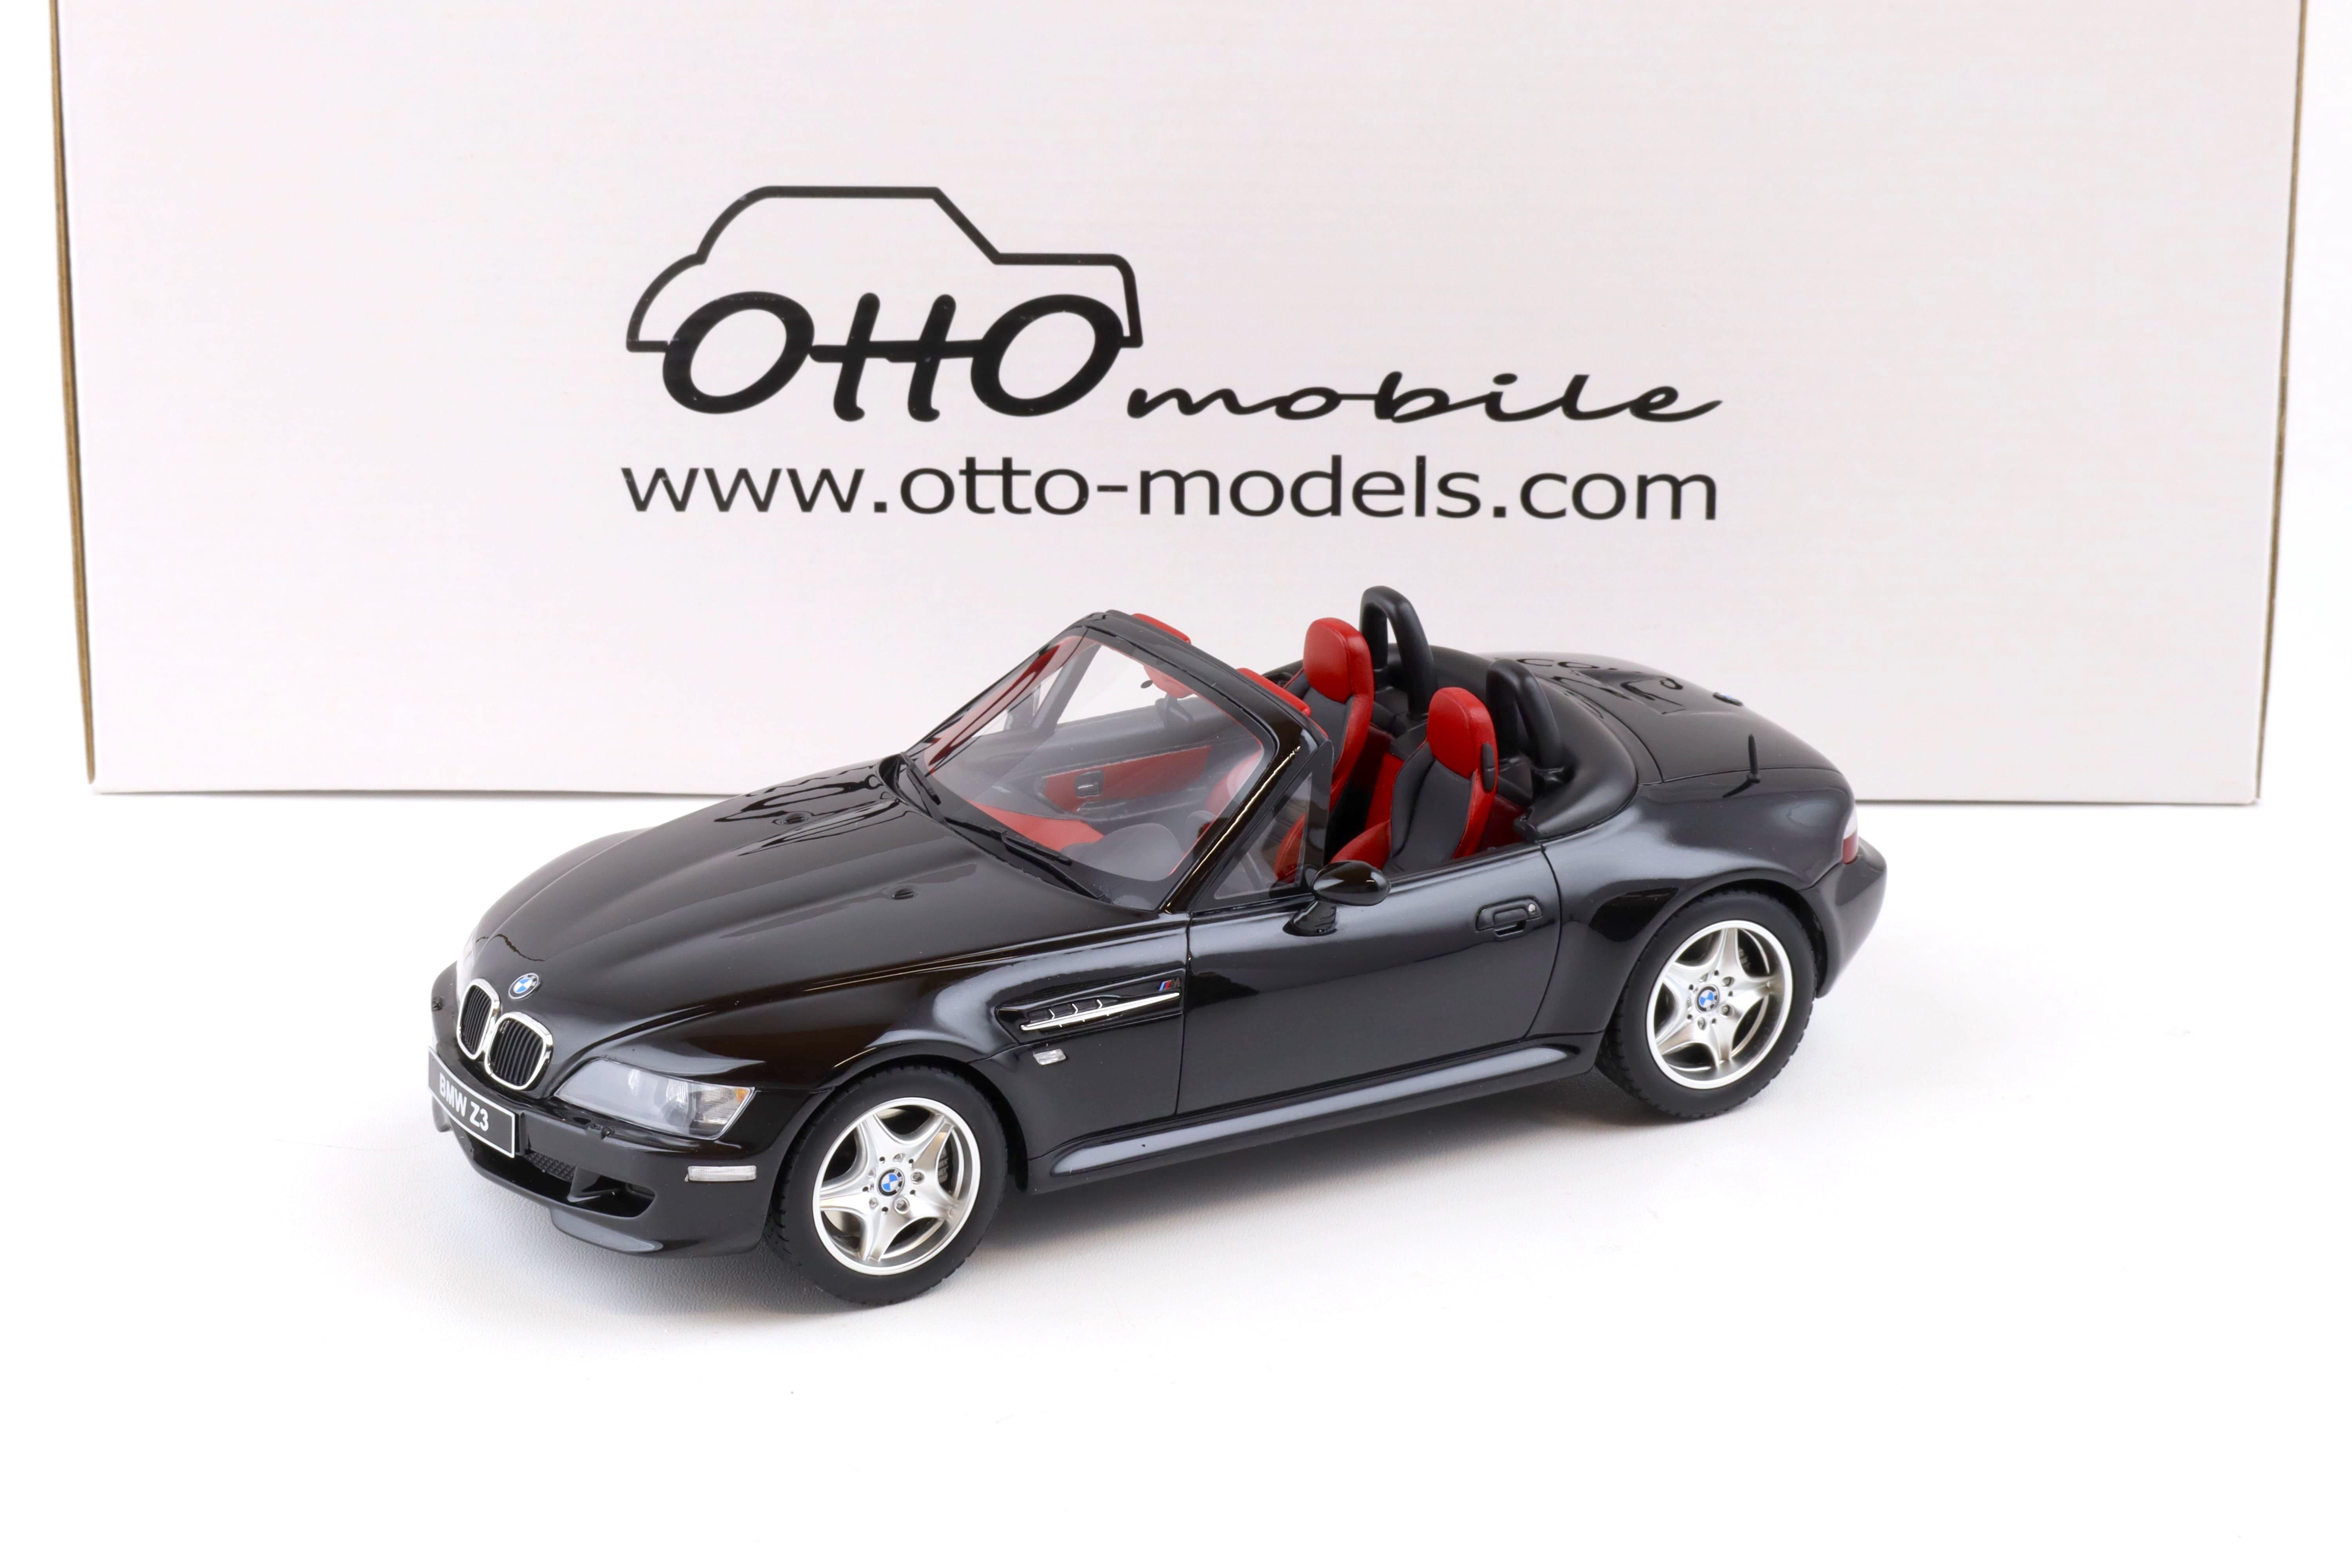 1:18 OTTO mobile OT1016 BMW Z3 M Roadster black/ red 1999